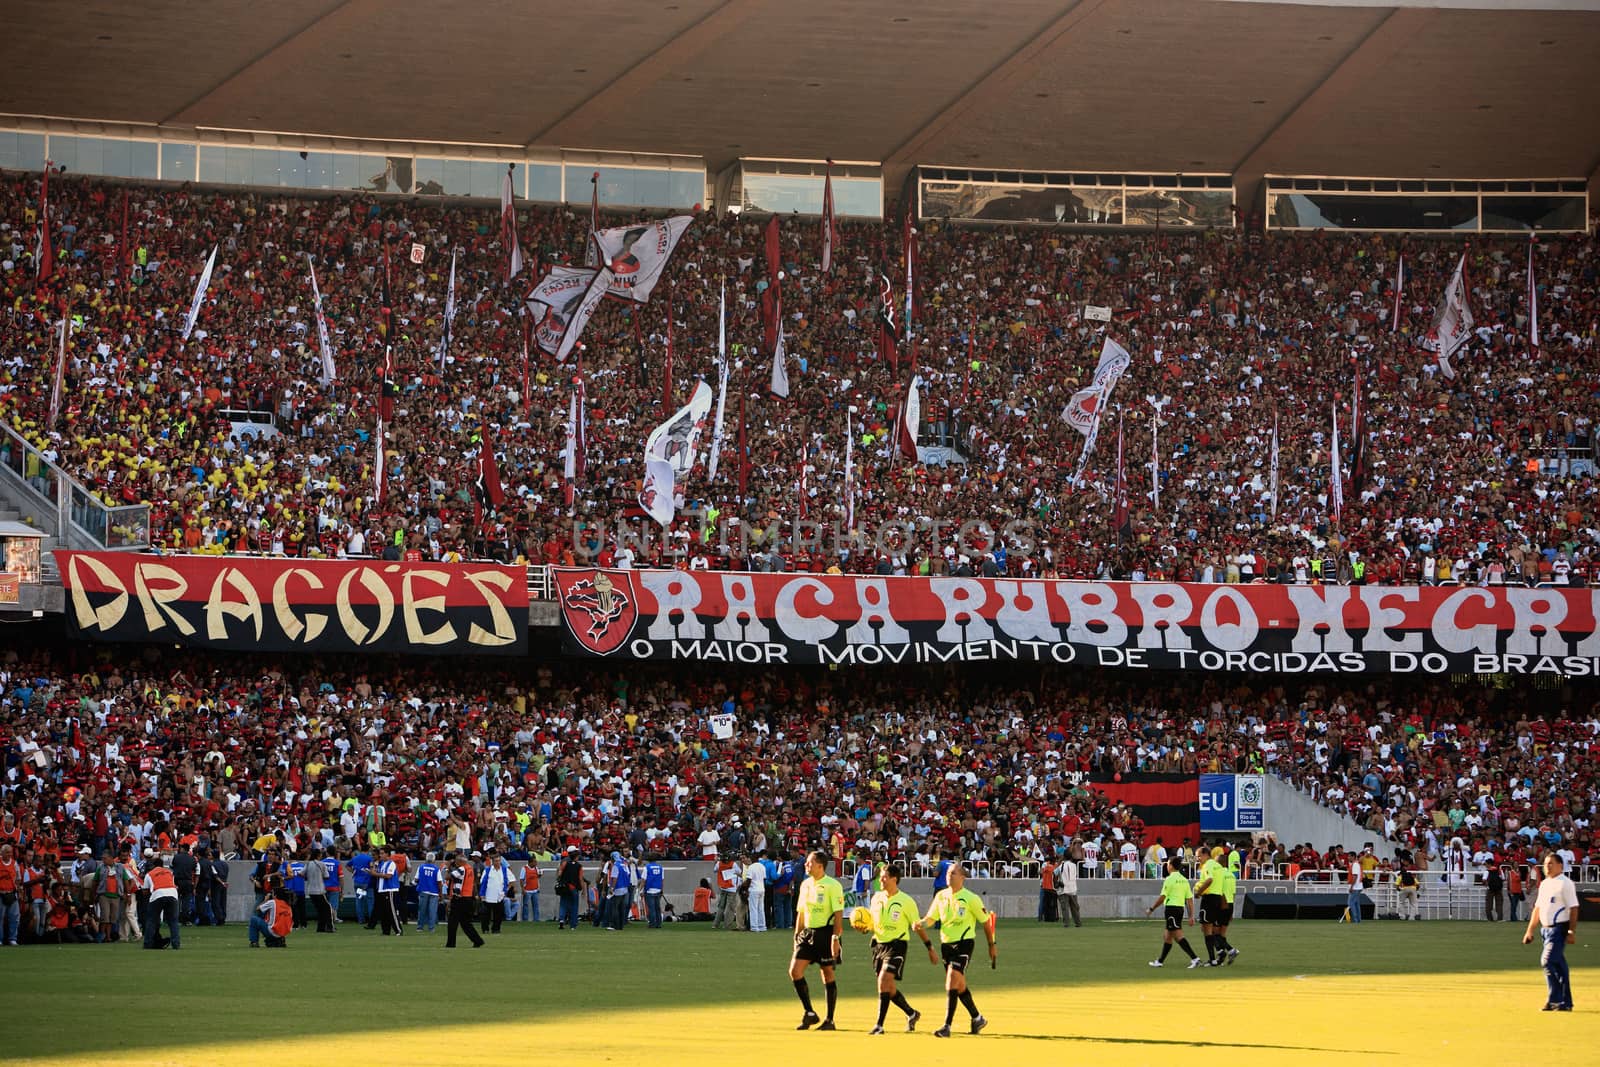 Flamengo supporters maracana stadium Rio de Janeiro Brazil by PIXSTILL